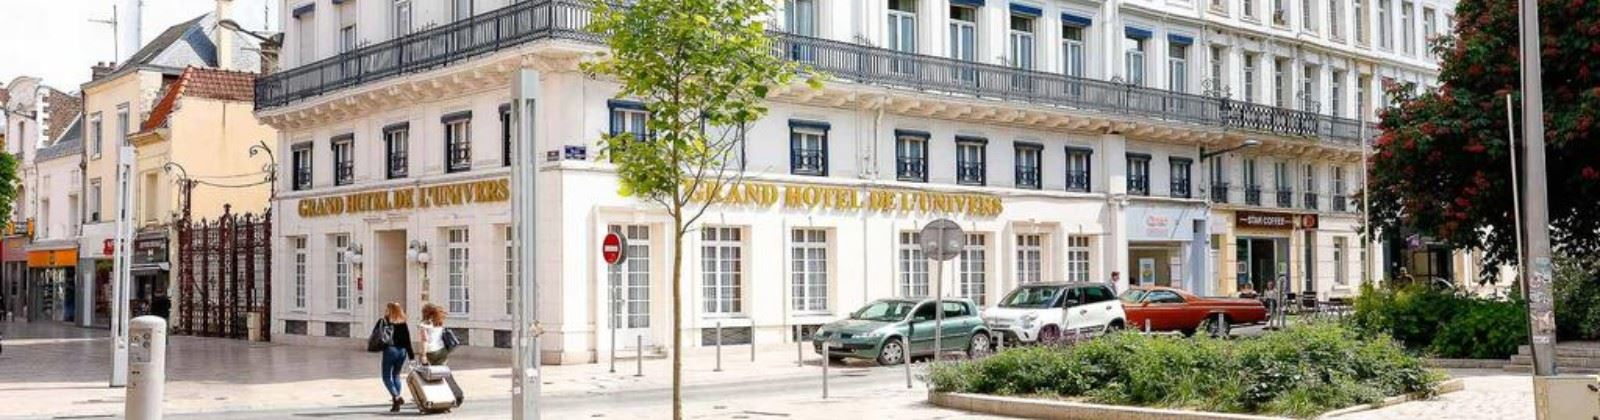 OLEVENE Image - grand-hotel-de-l-univers-olevene-restaurant-seminaire-conference-